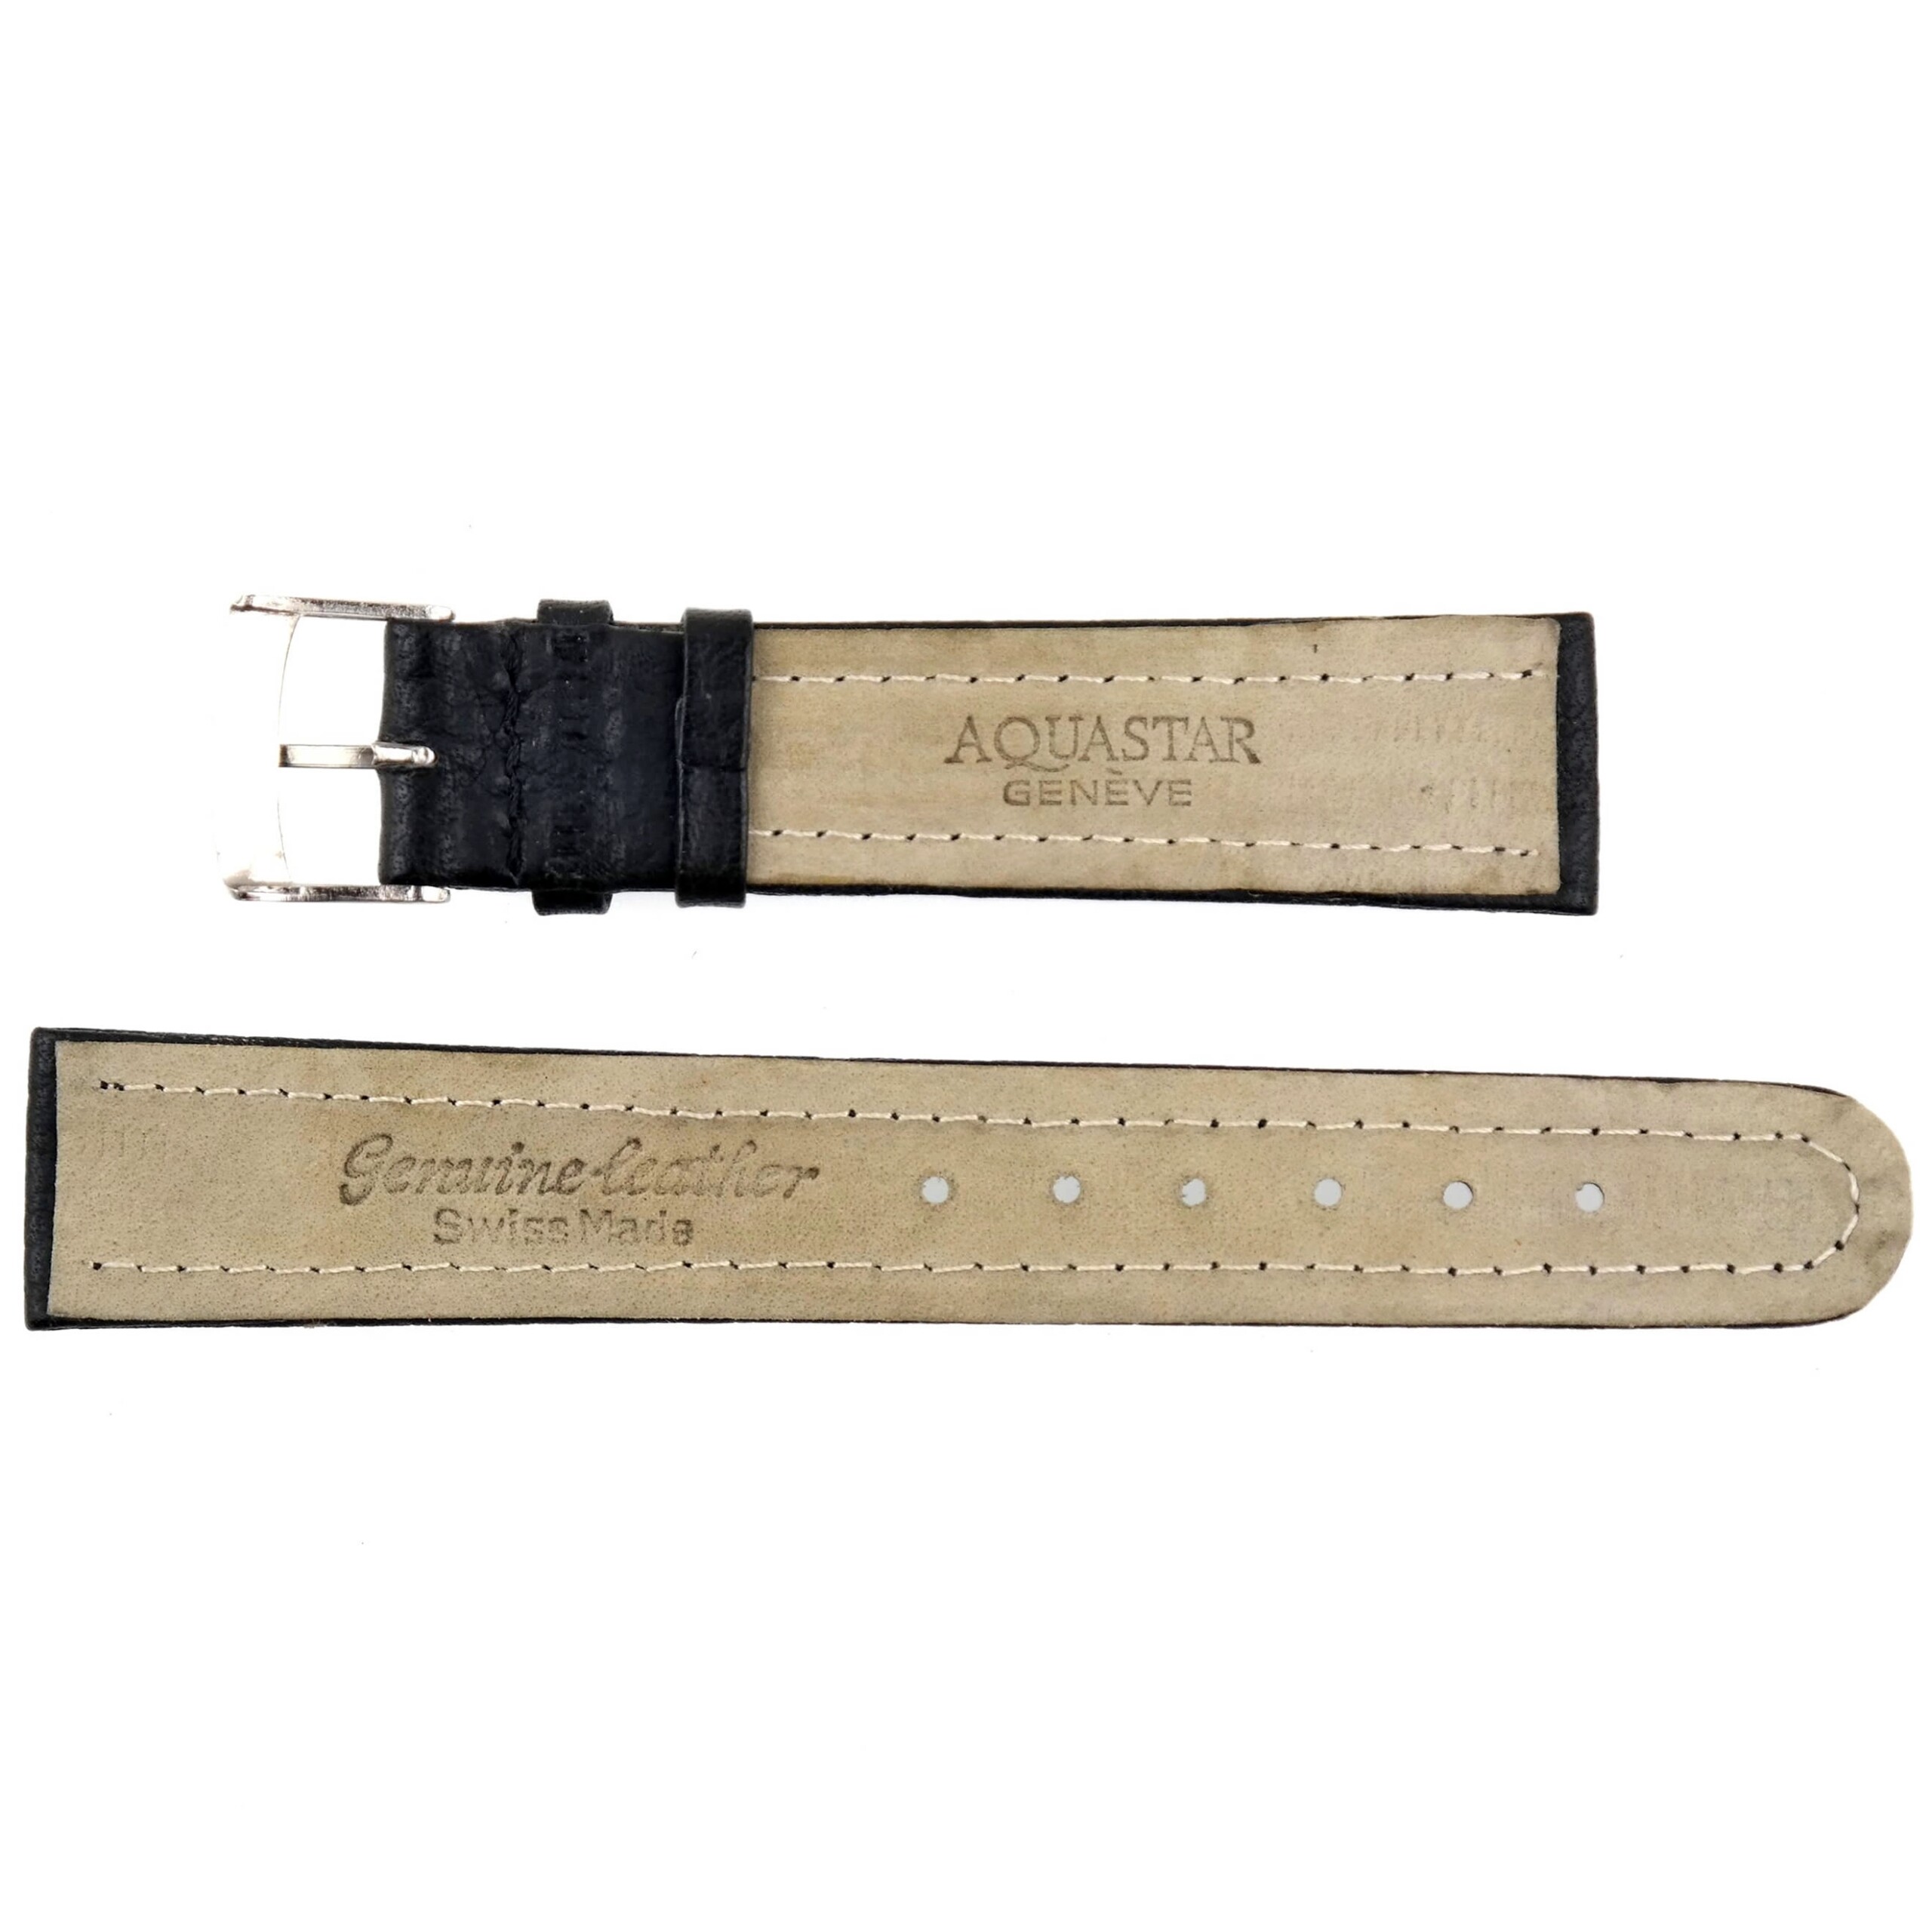 AQUASTAR Geneve - Vintage Watch Strap - 18 mm - Genuine Leather - Swiss Made